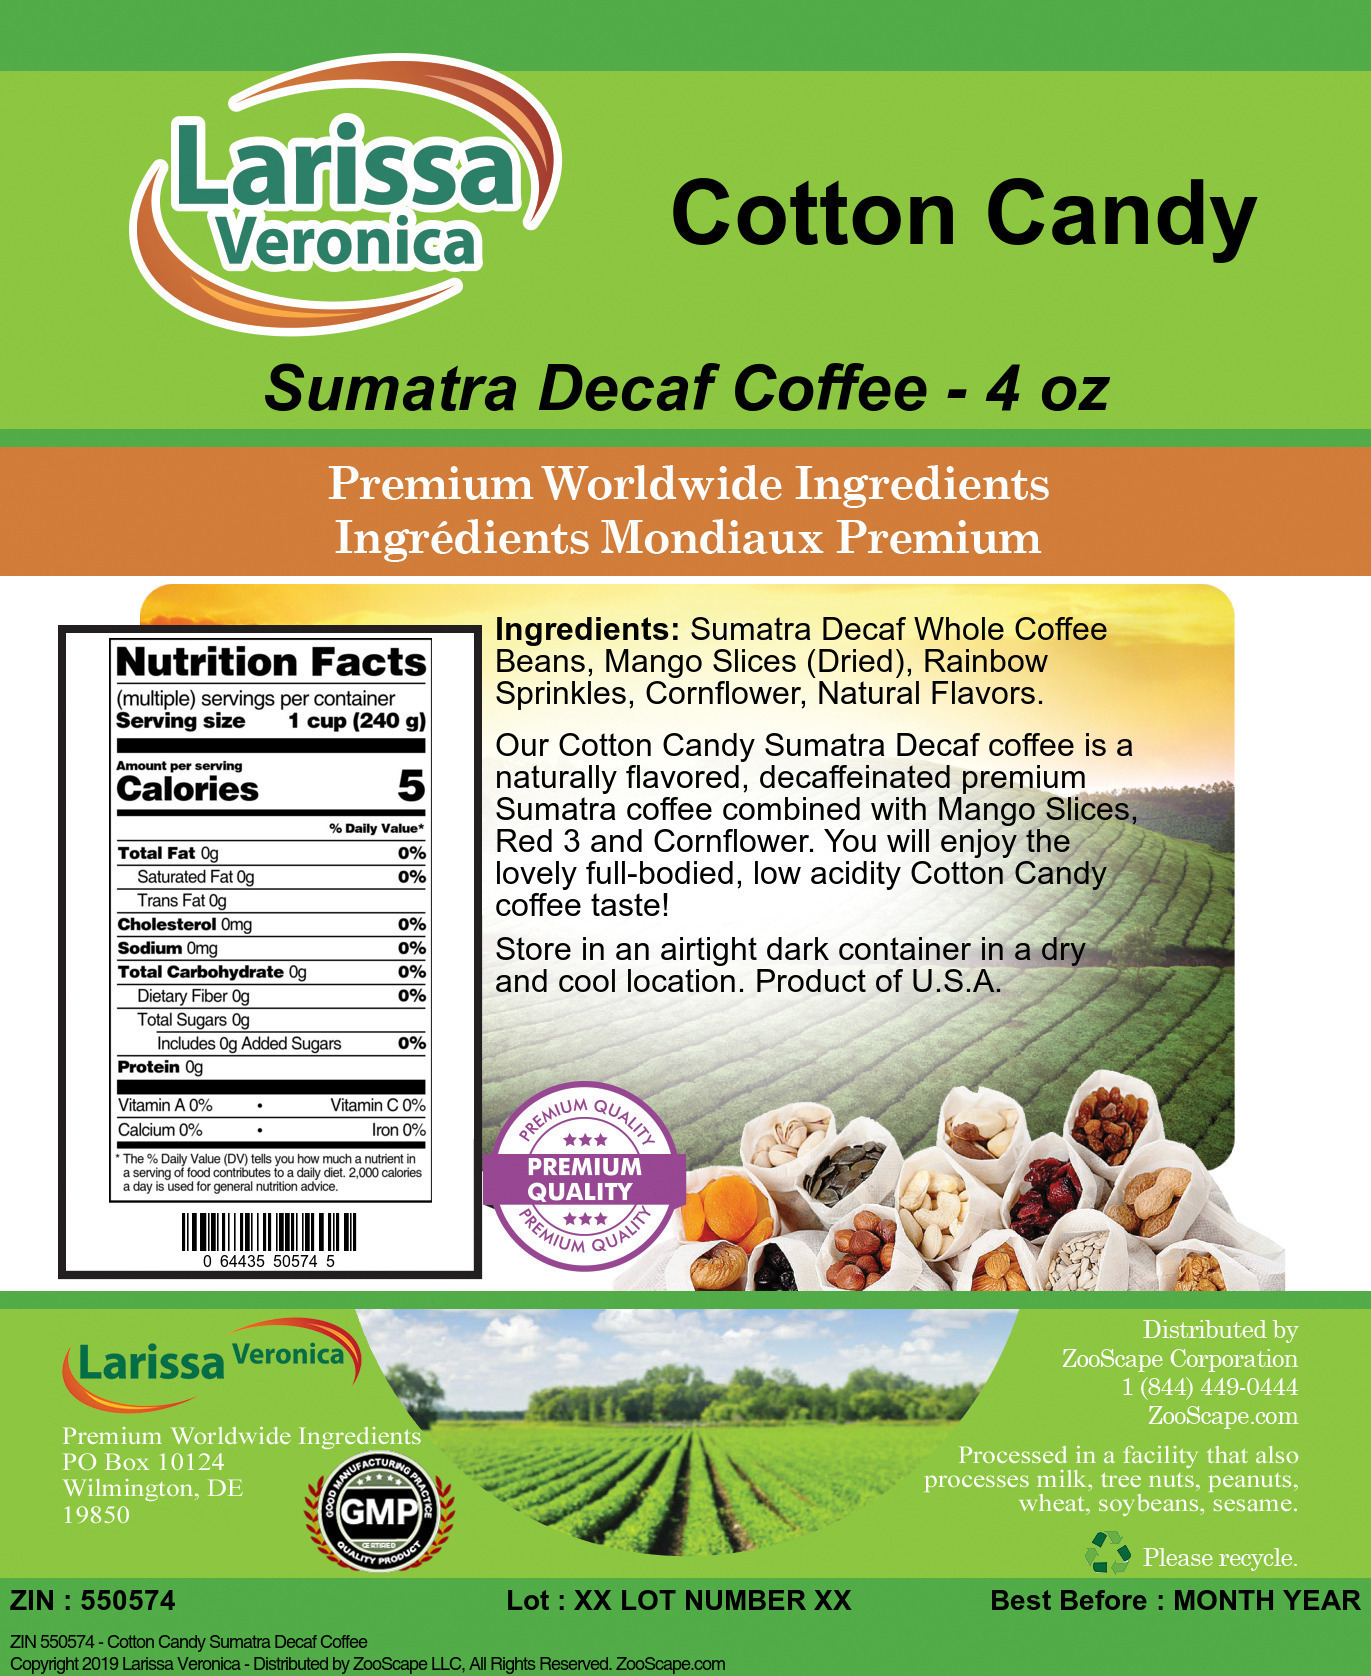 Cotton Candy Sumatra Decaf Coffee - Label